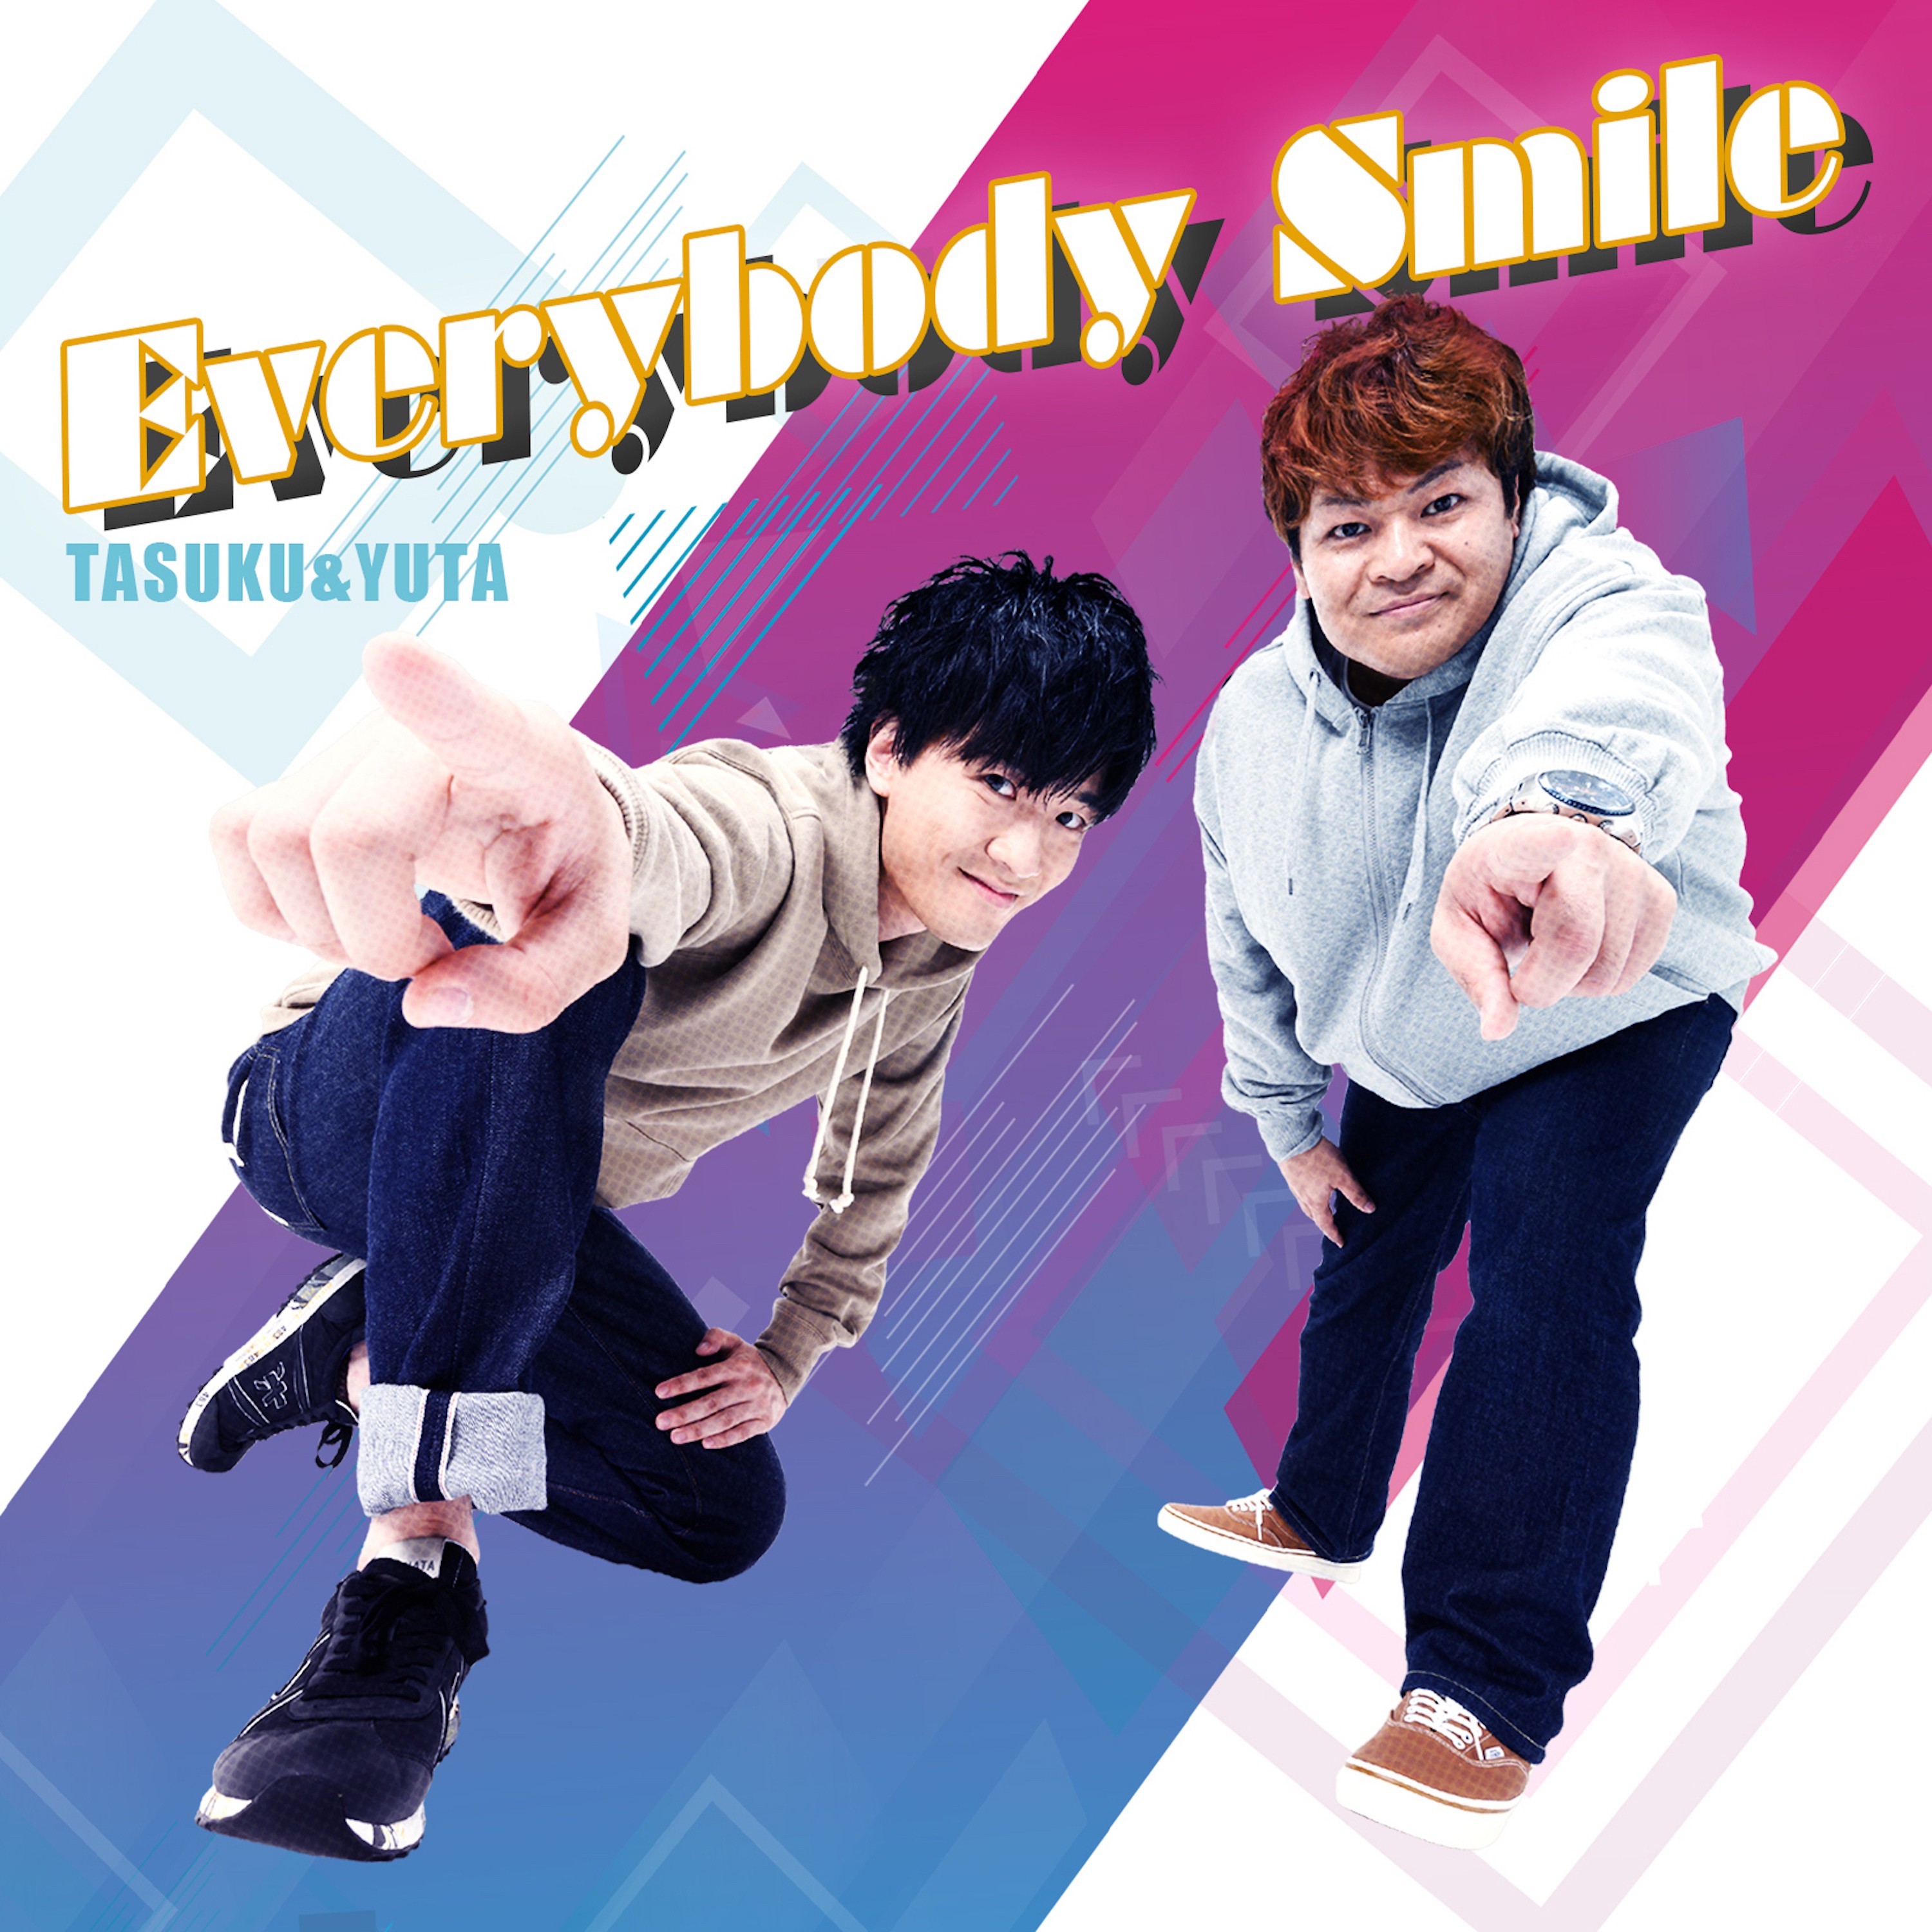 Everybody Smile